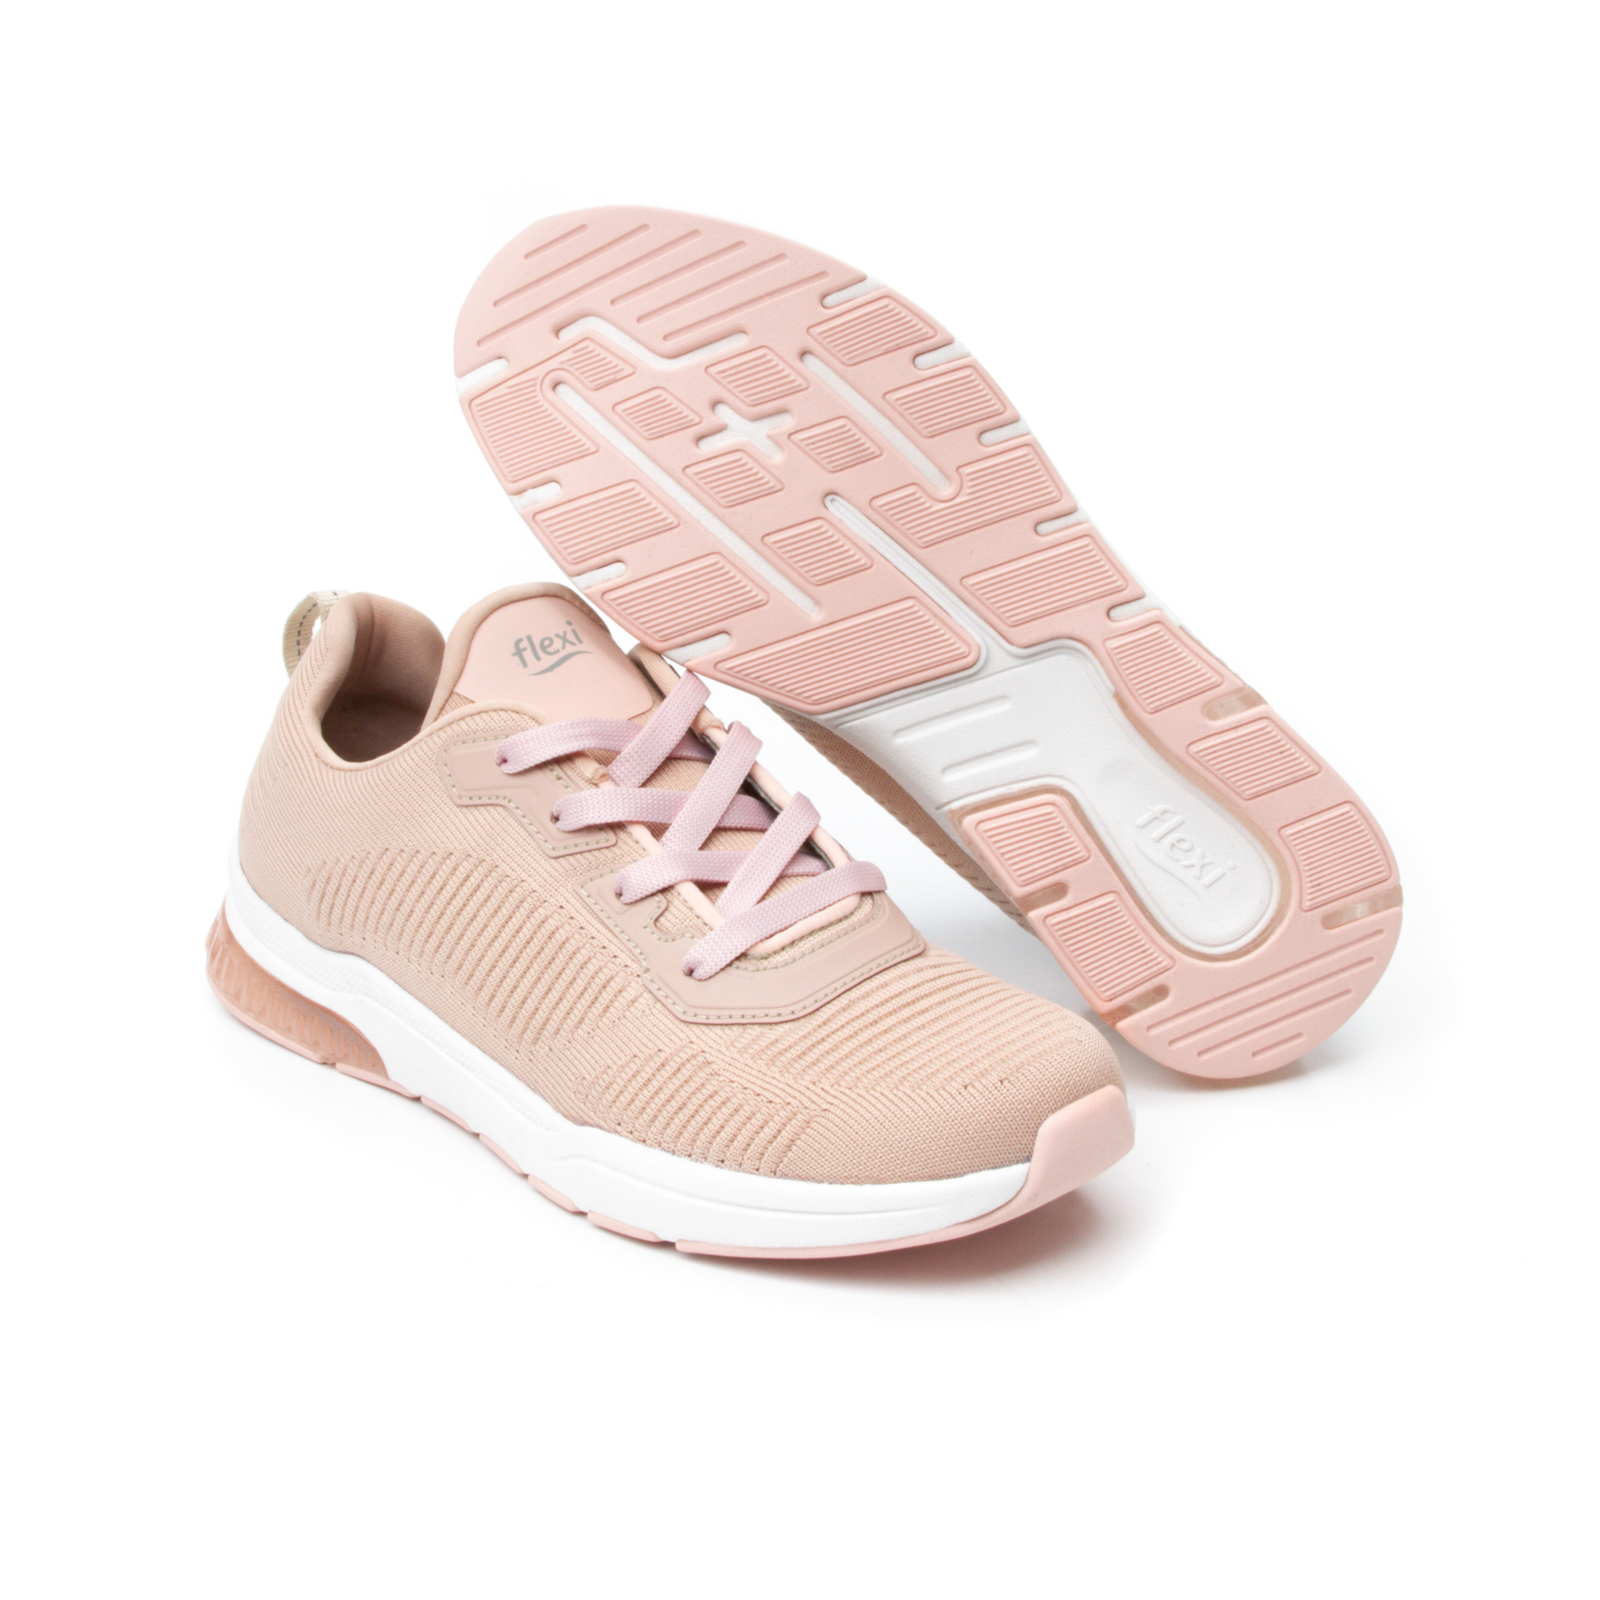 Sneaker Tejido Flexi para Mujer con Sistema Form Estilo 105103 Rosa | Site USA